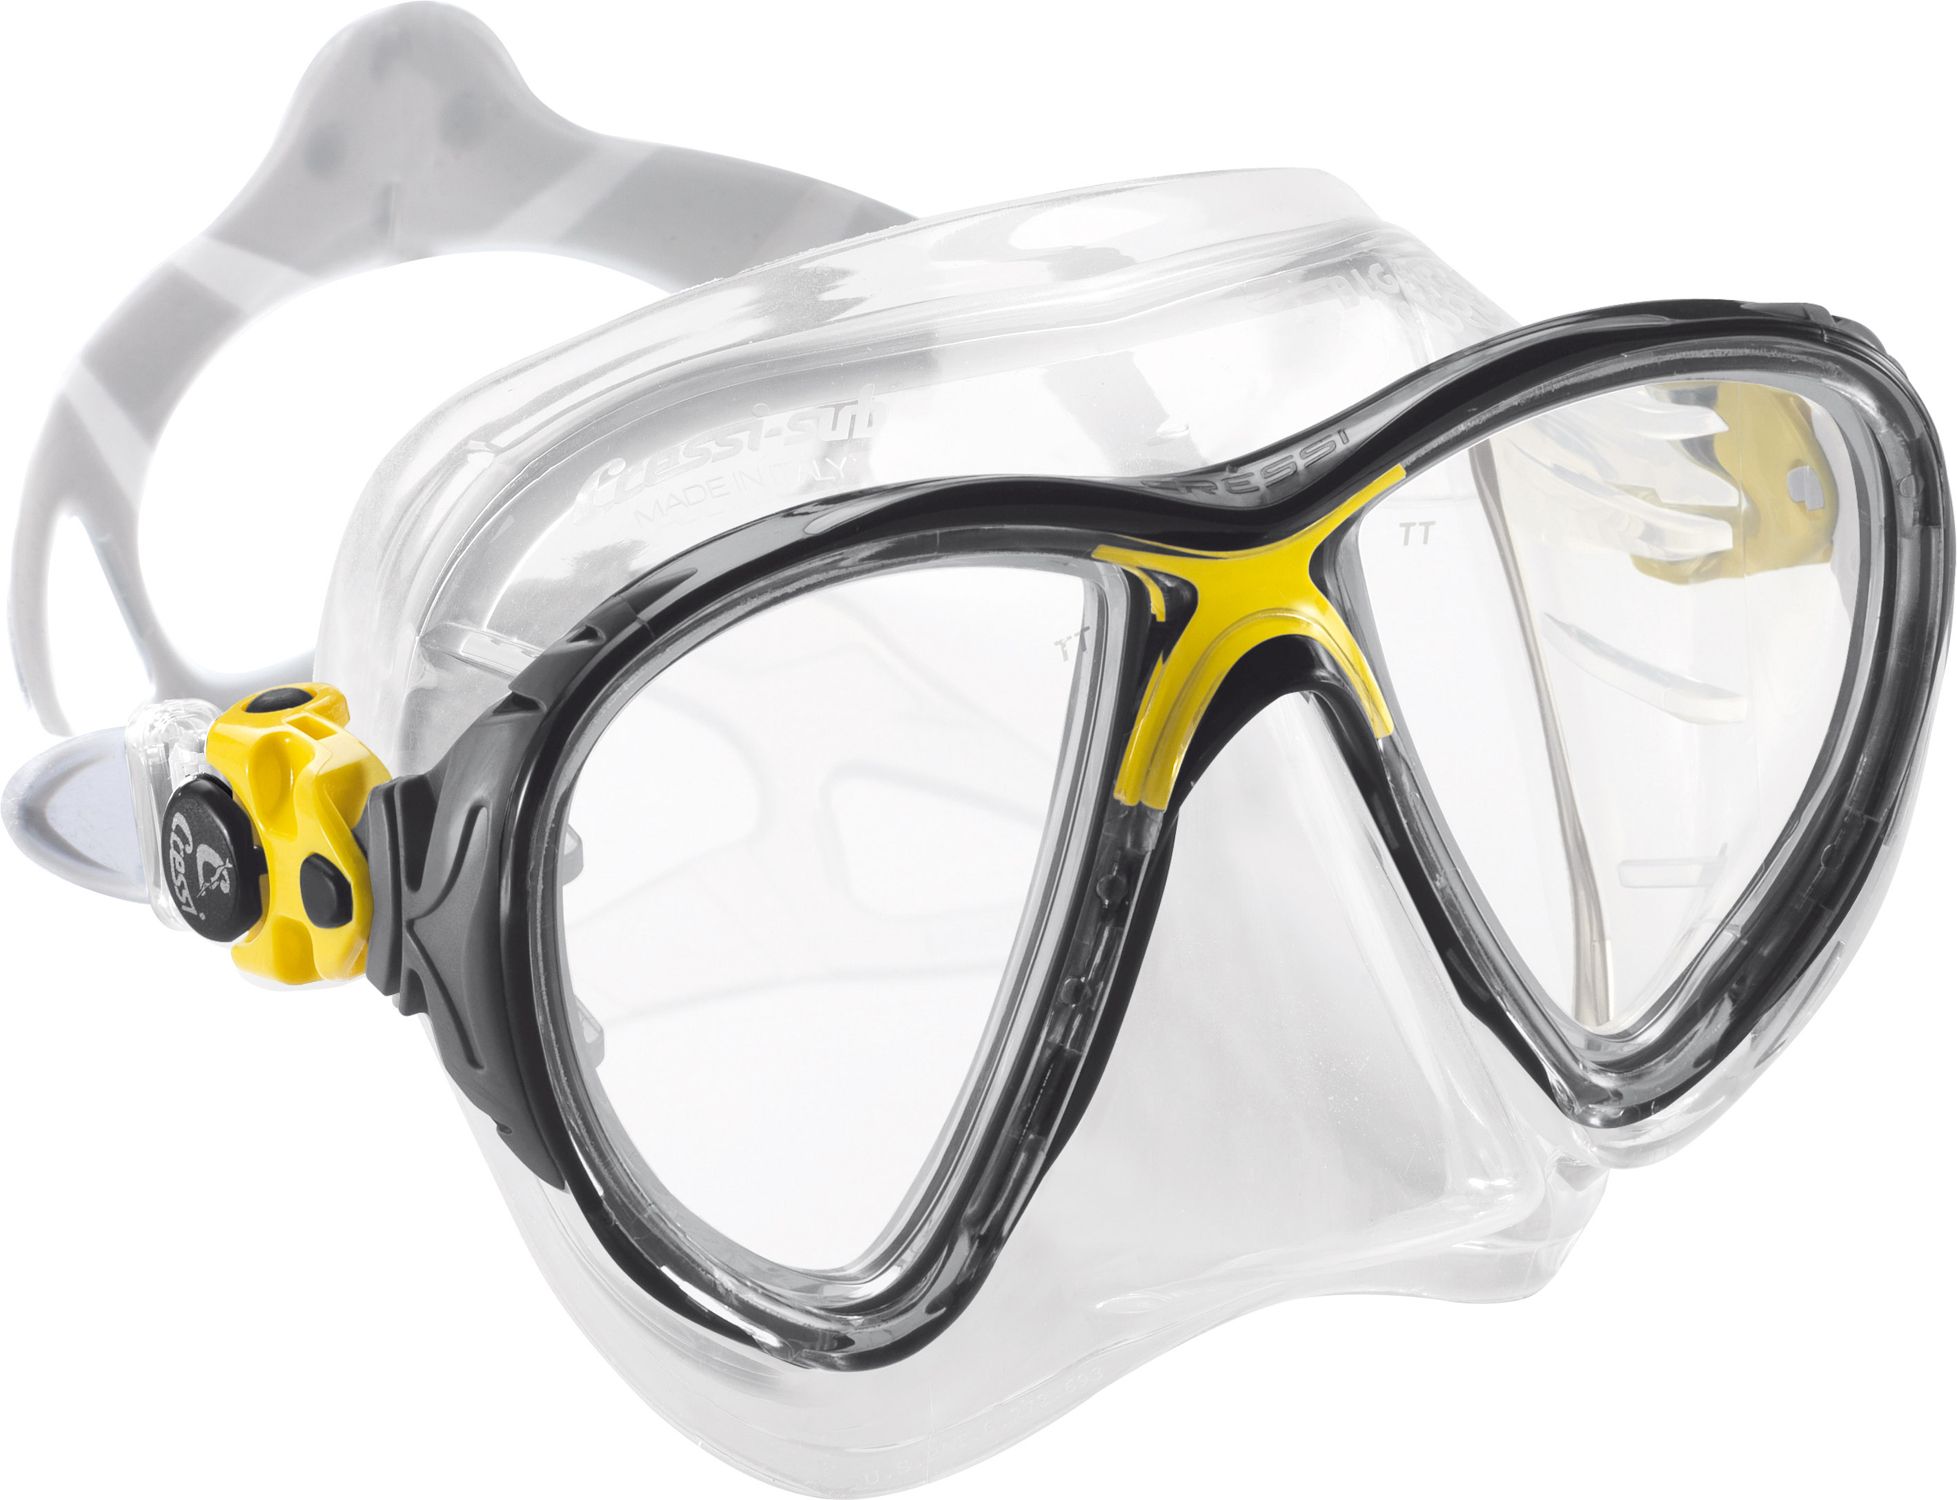 Photos - Swimming Mask Cressi Sub Cressi Big Eyes Evolution Crystal Snorkeling & Scuba Mask, Yellow 16CREABG 